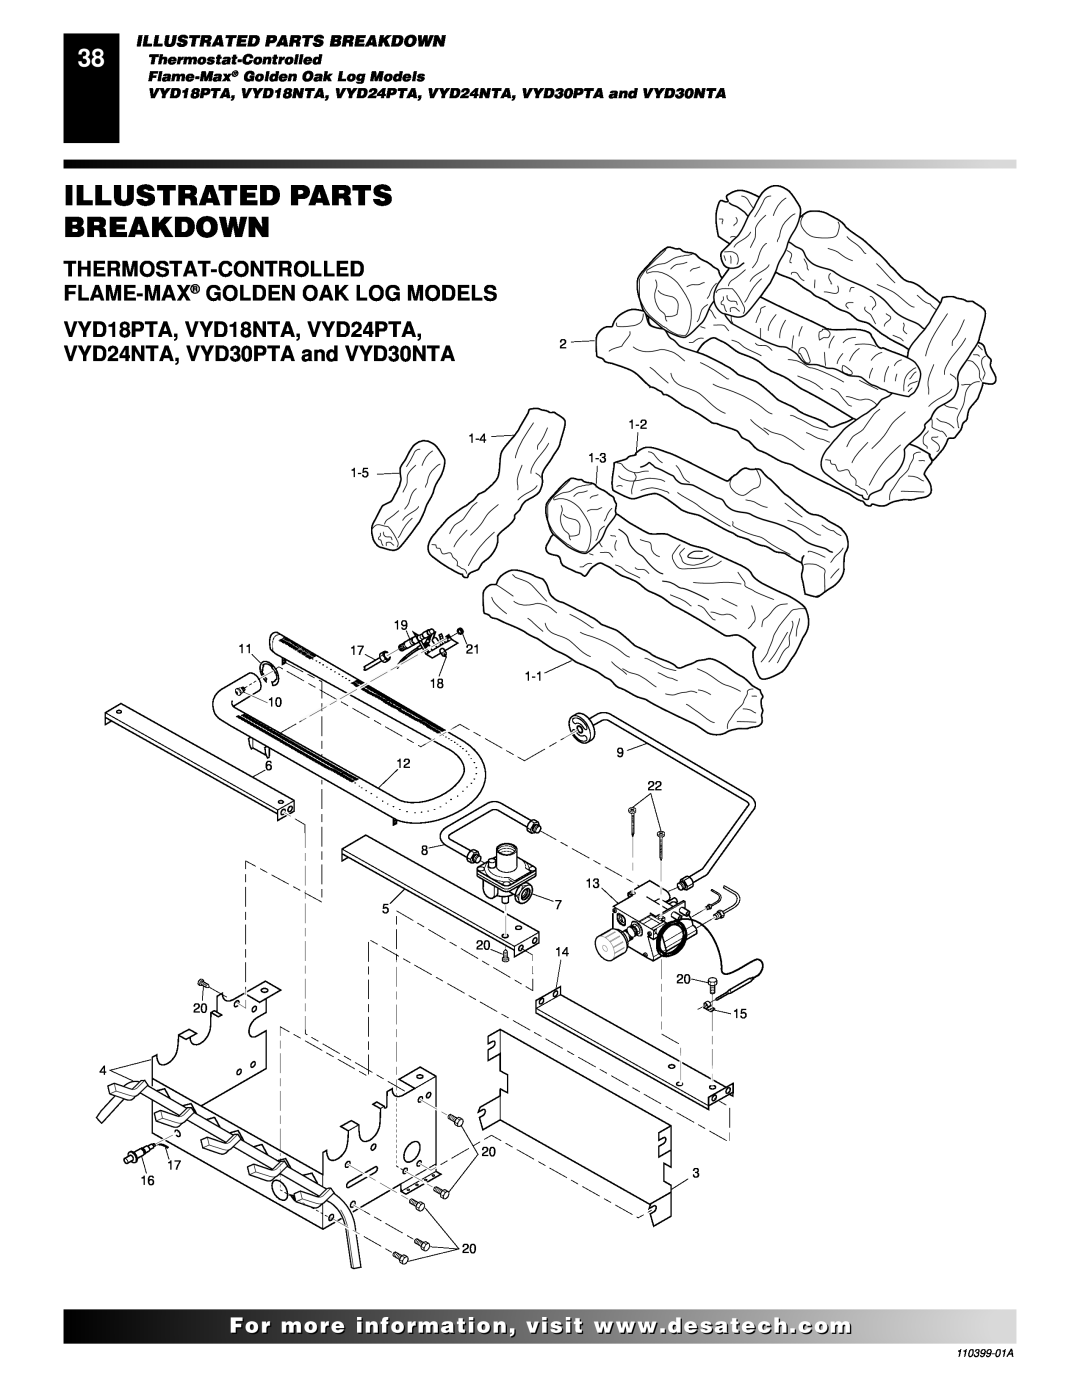 Desa FLAME-MAX Golden Illustrated Parts Breakdown, Thermostat-Controlled, Flame-Max Golden Oak Log Models 